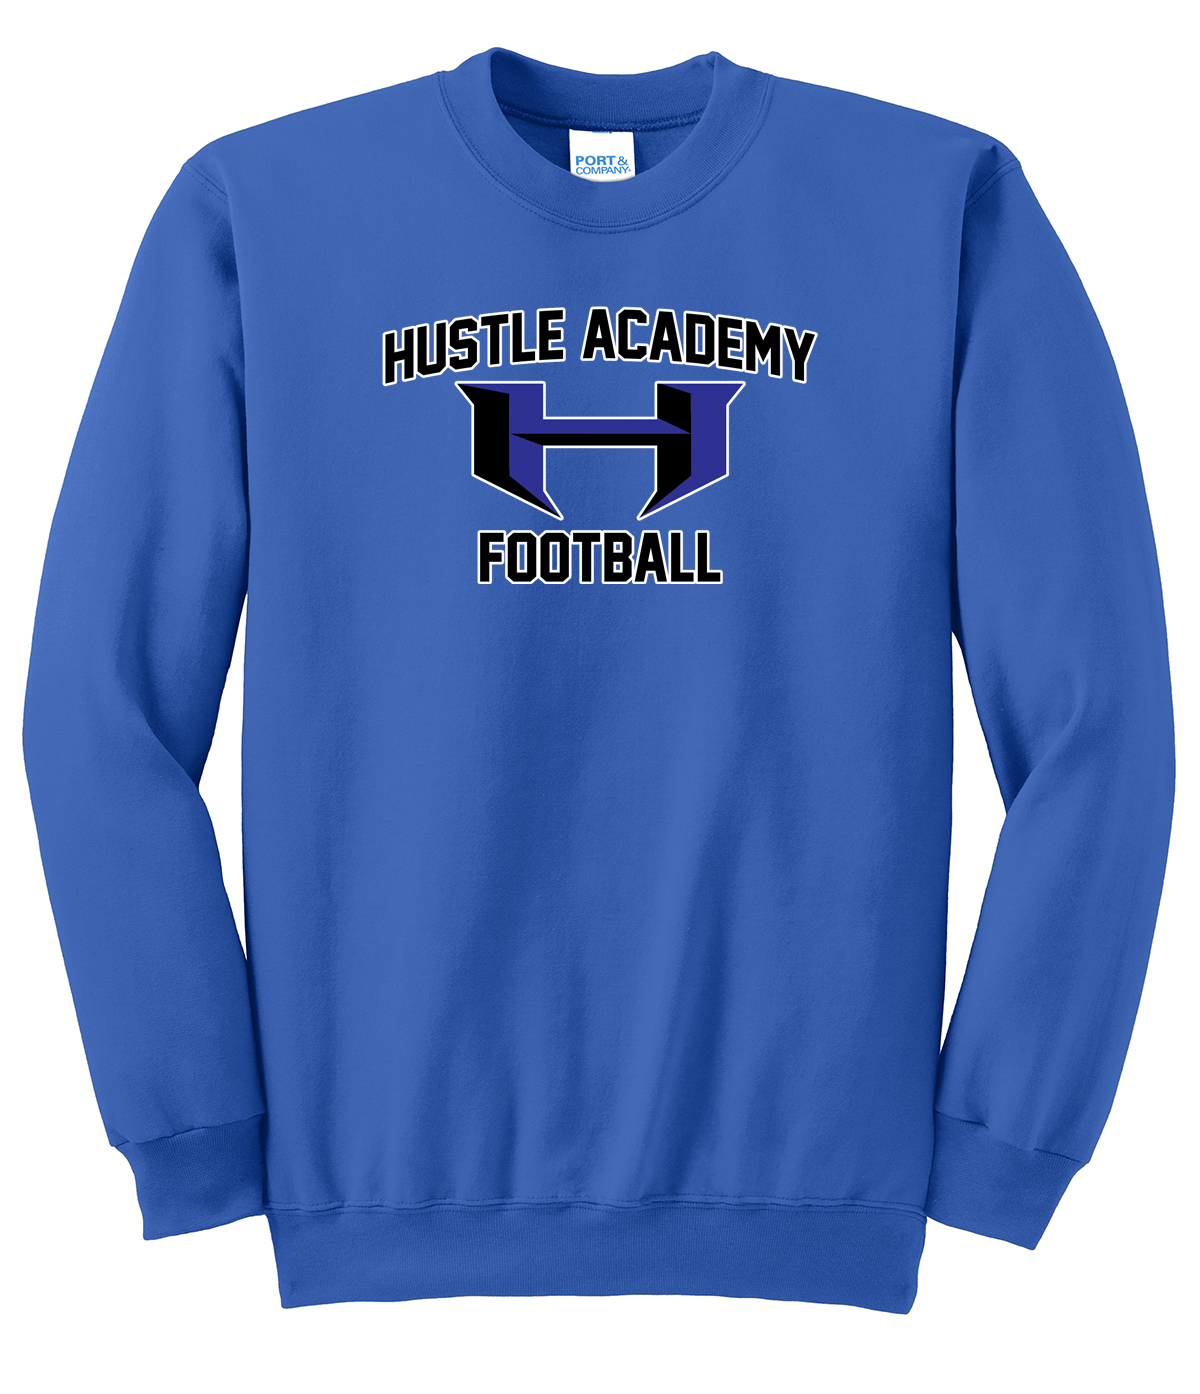 Hustle Academy Football Crew Neck Sweater